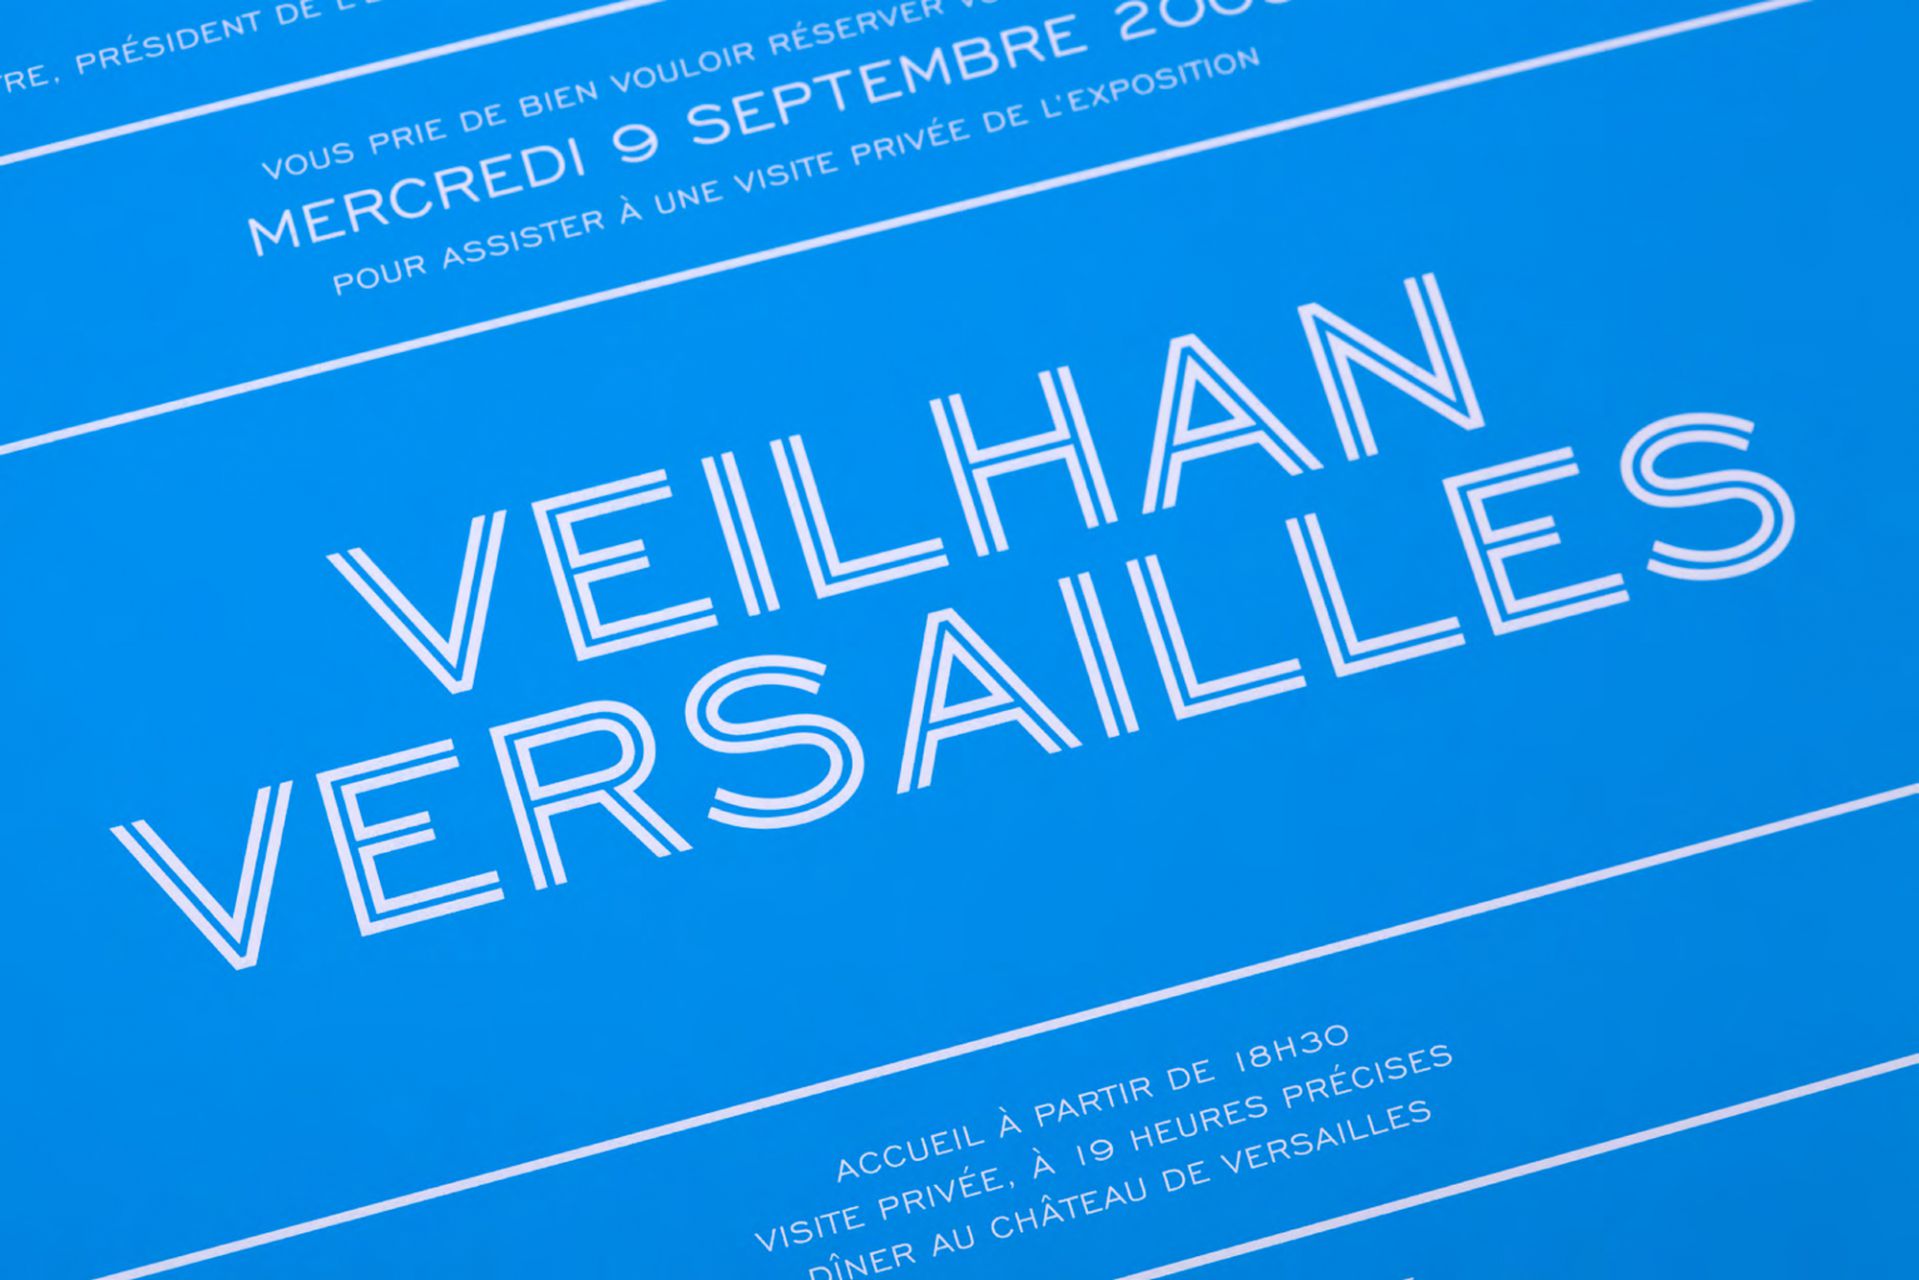 Veilhan Versailles identity & signage